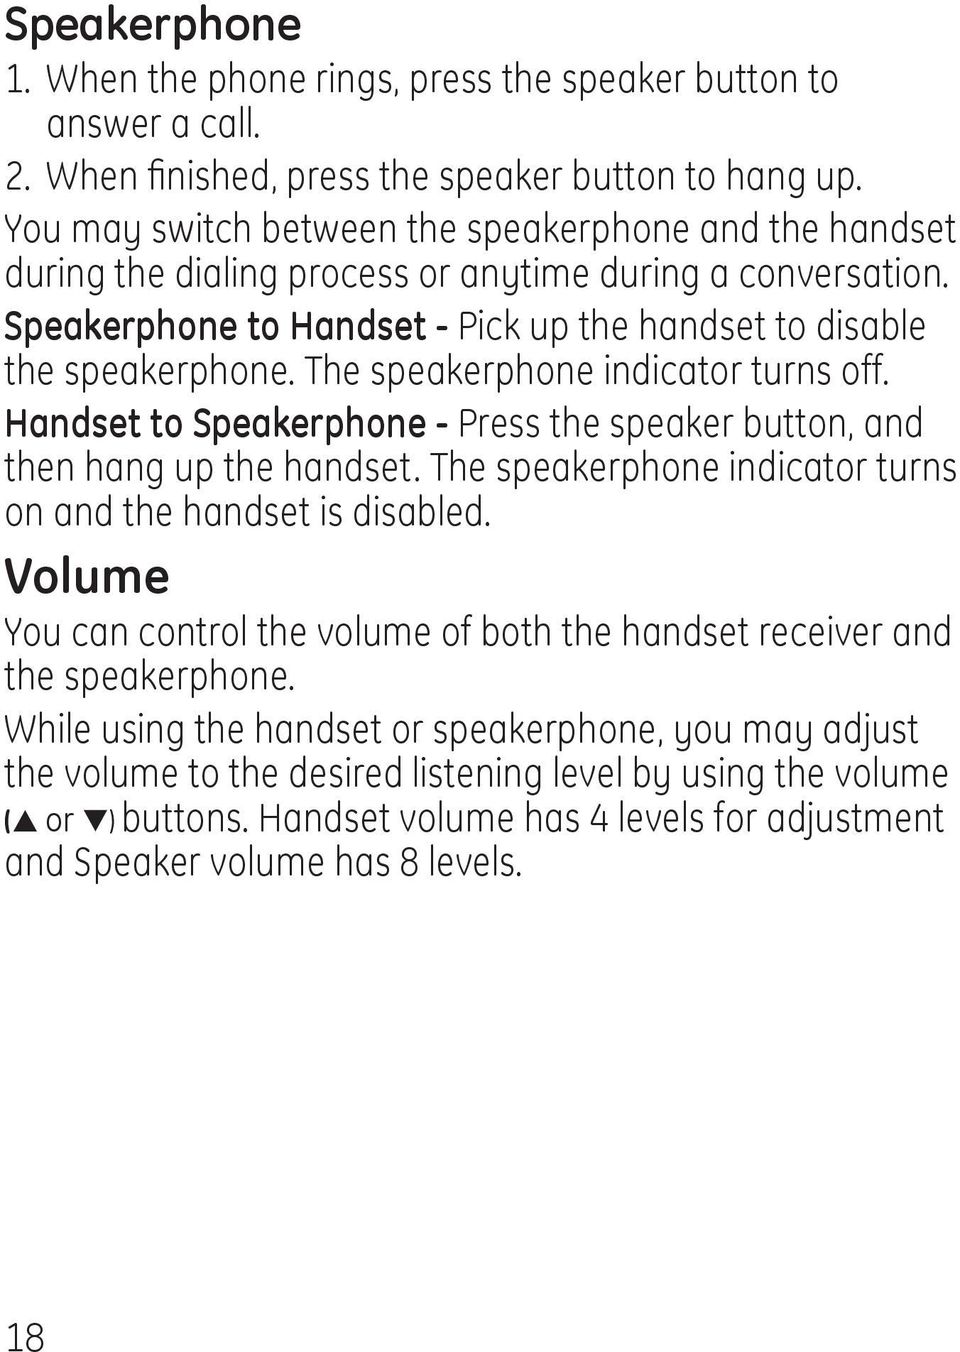 The speakerphone indicator turns off. Handset to Speakerphone - Press the speaker button, and then hang up the handset. The speakerphone indicator turns on and the handset is disabled.